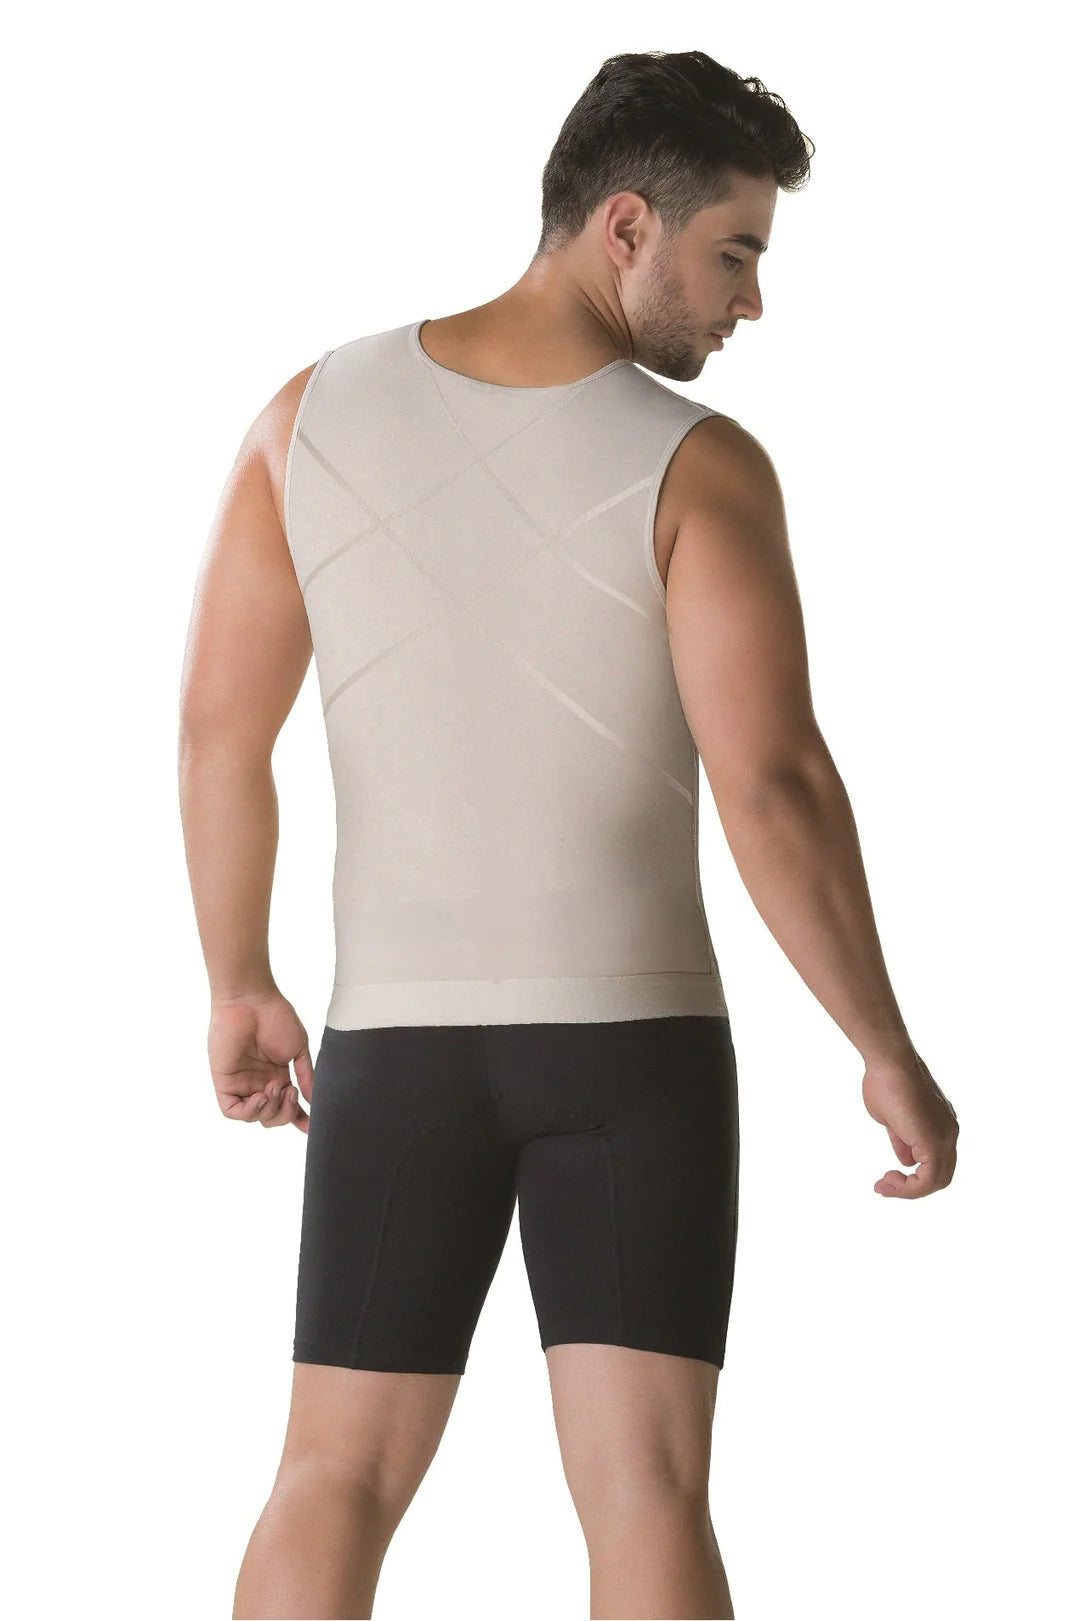 Men's Colombian Slimming Side Zipper Body Shaper Compression Vest